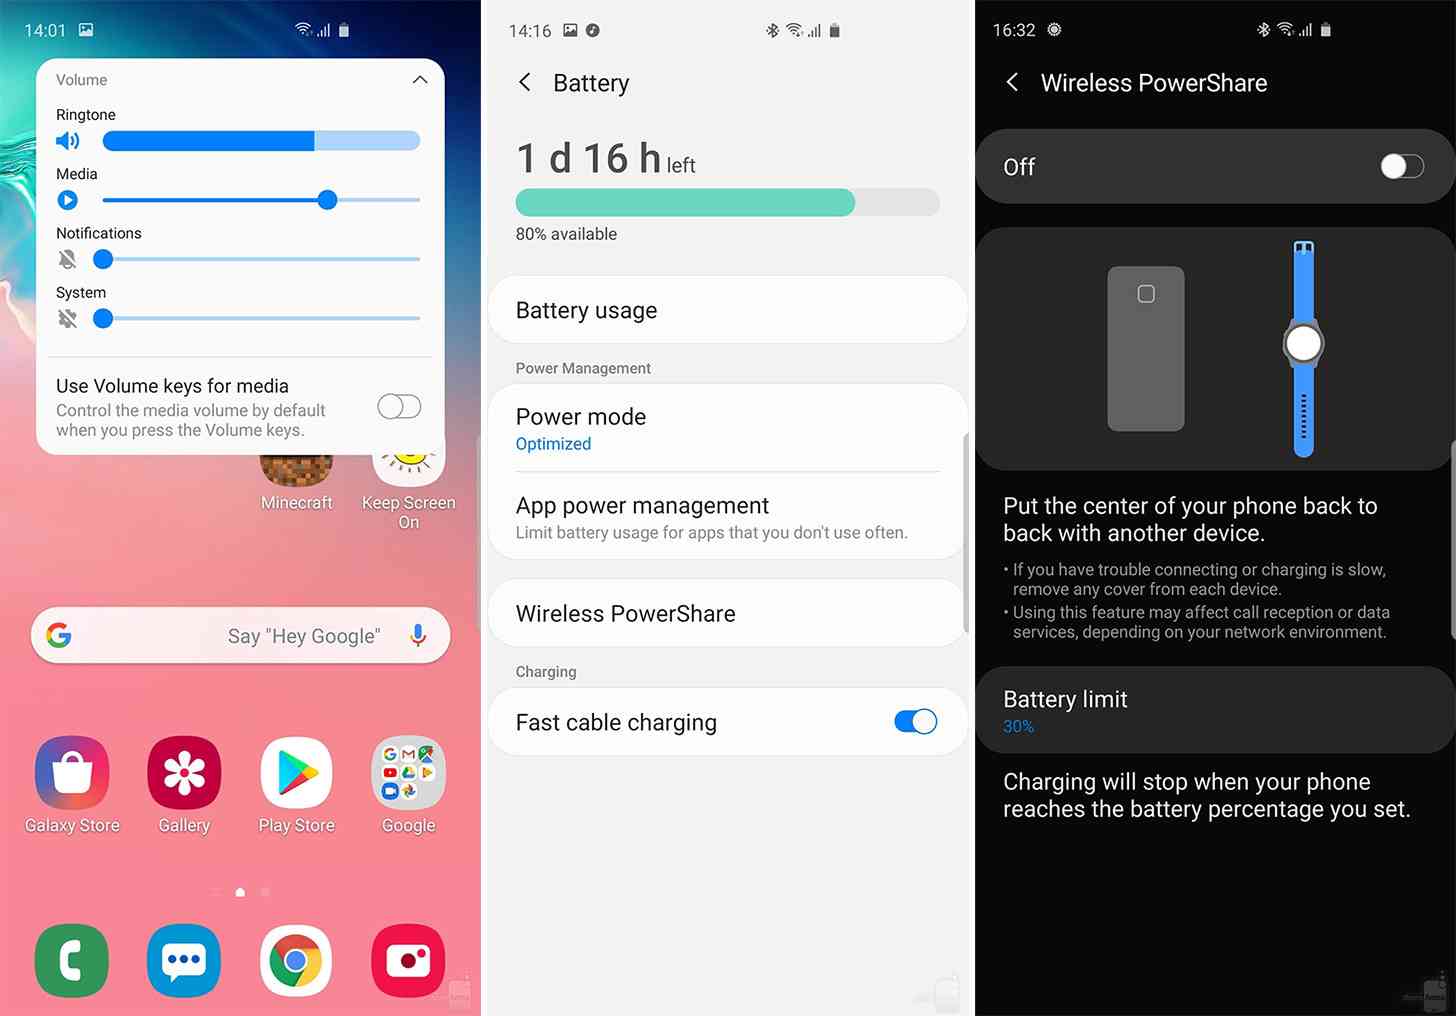 Samsung One UI 2 Android 10 beta screenshots